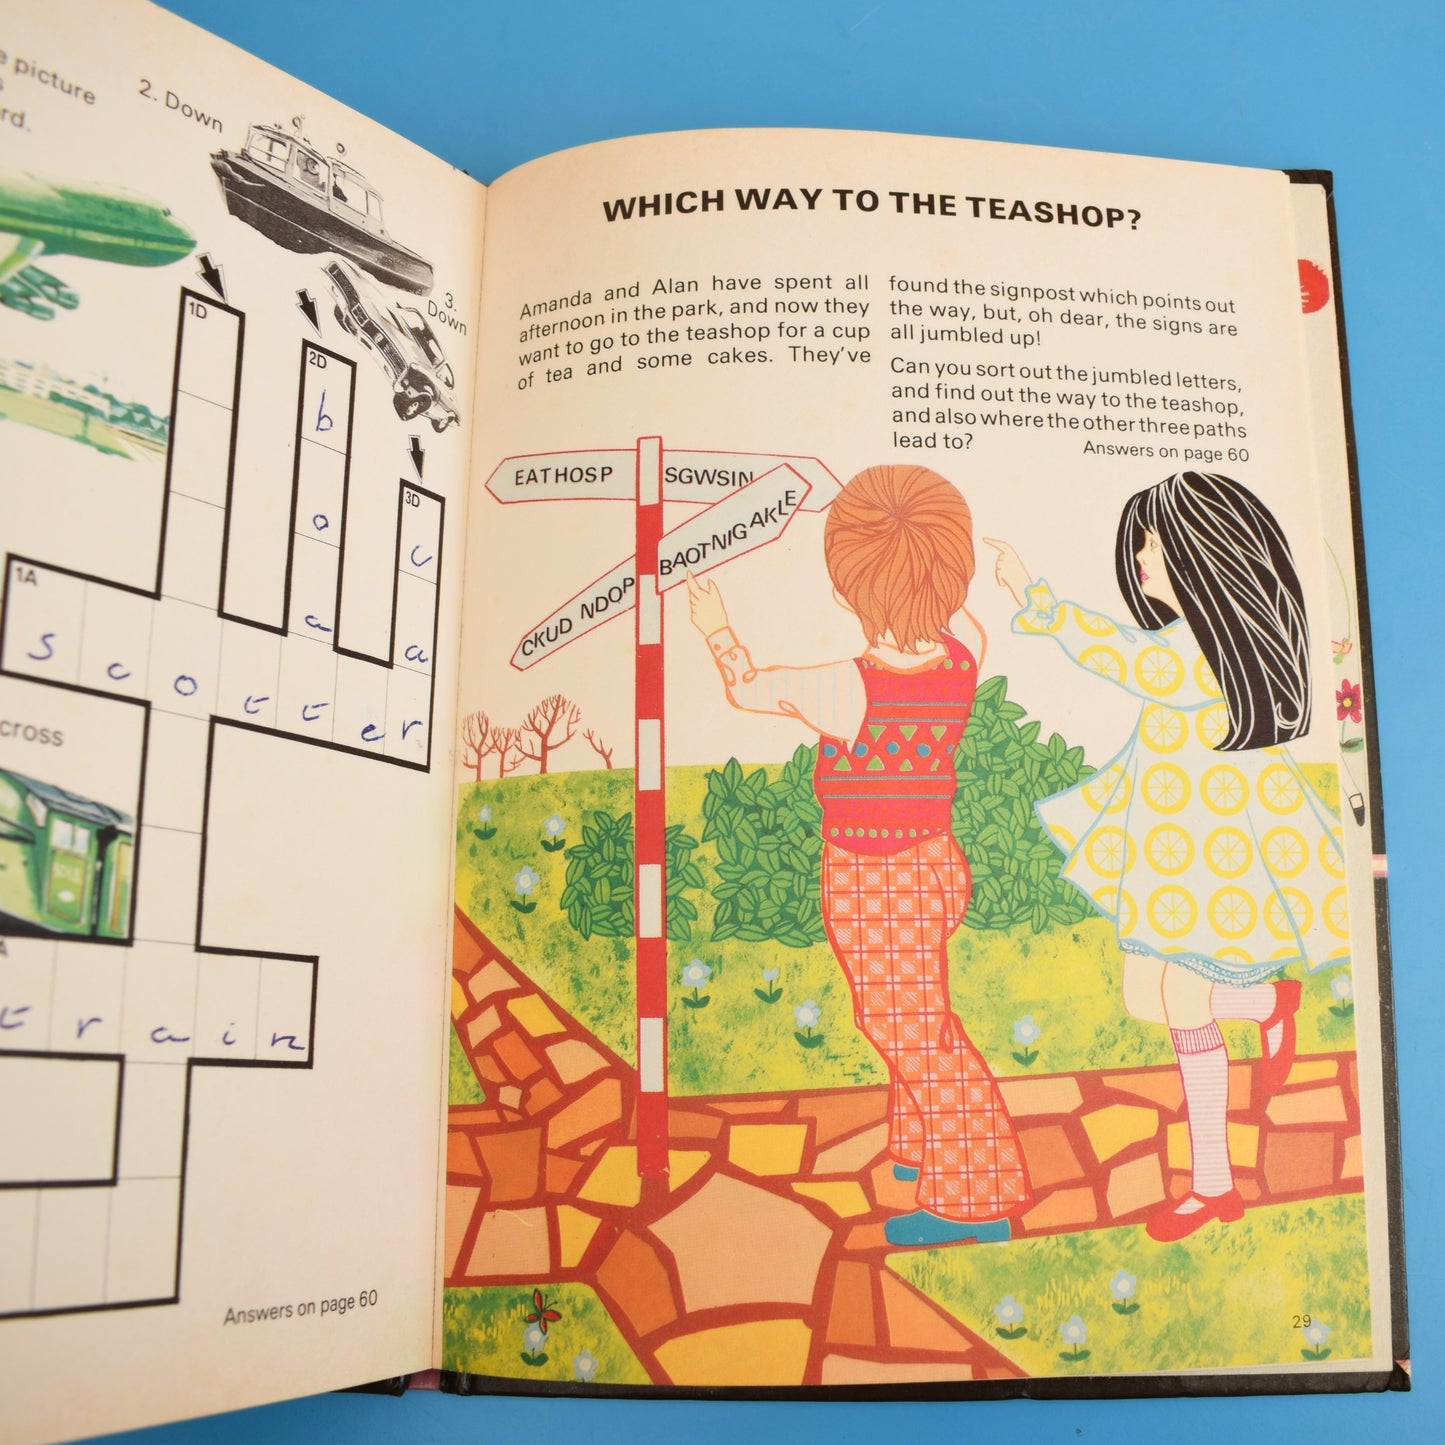 Vintage 1970s Play School Book